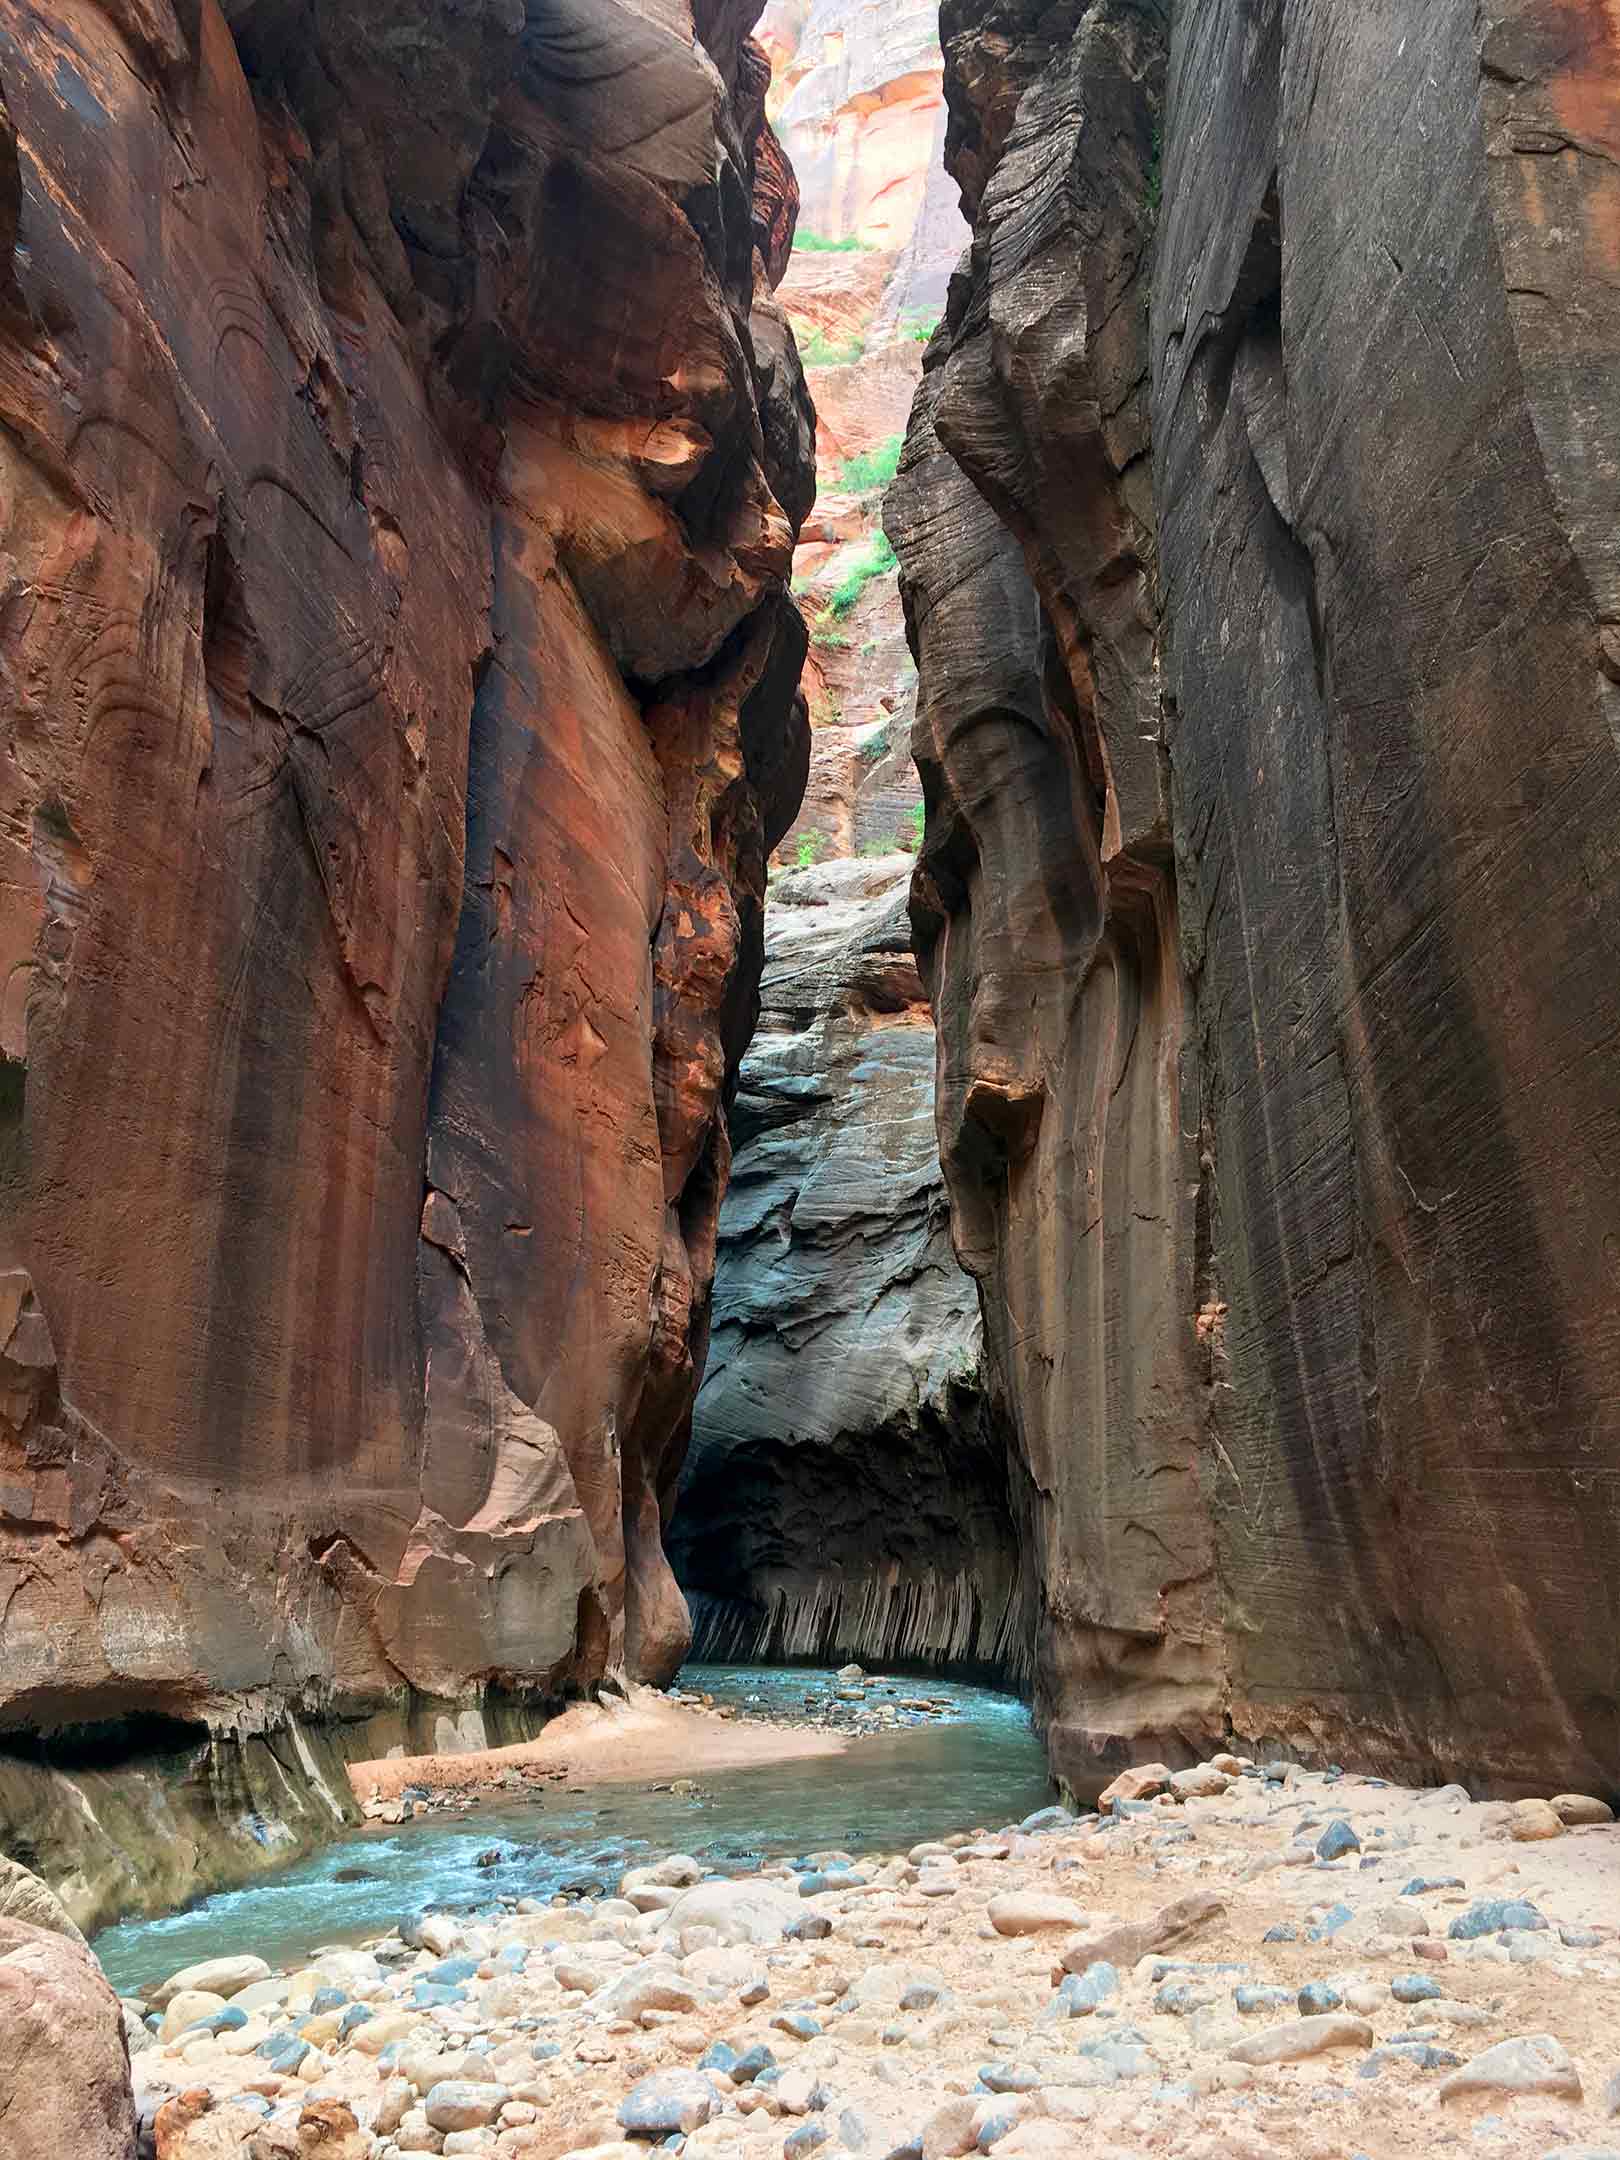 The Narrows Zion National Park narrow canyon